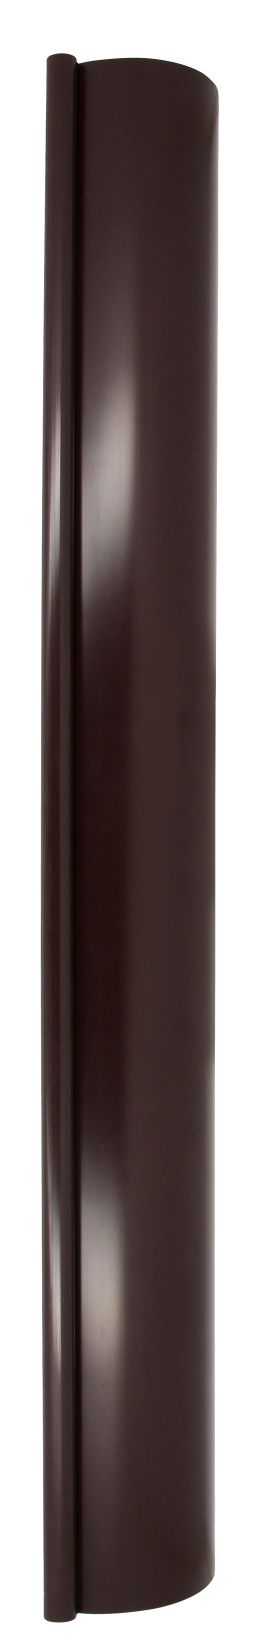 Profile de gouttiere de type 25 en 2 metre marron